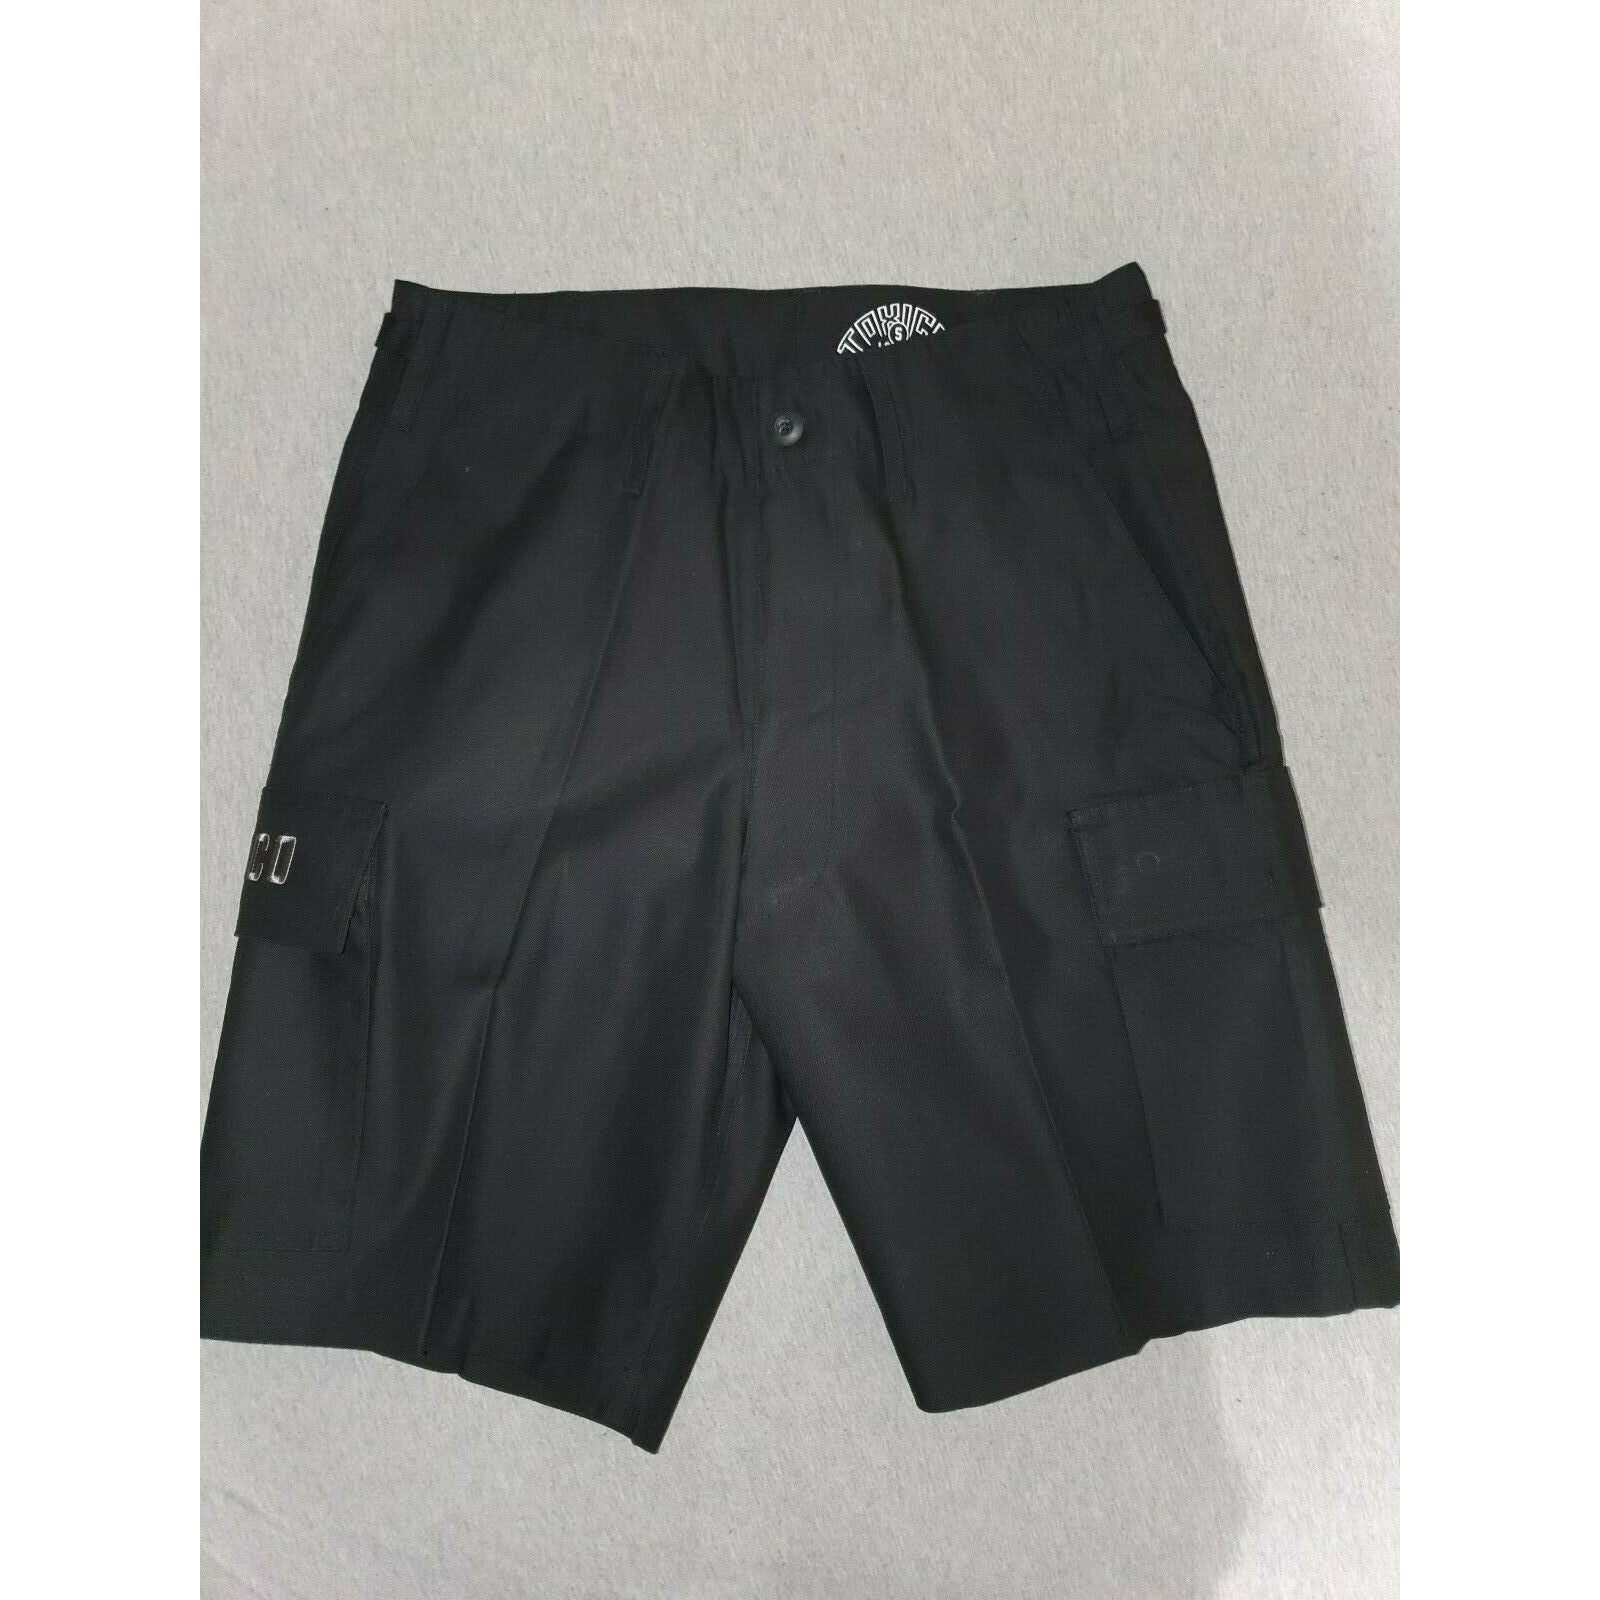 Plain Black Adjustable Cargo Shorts-Mens Shorts & Pants-Scarlett Dawn